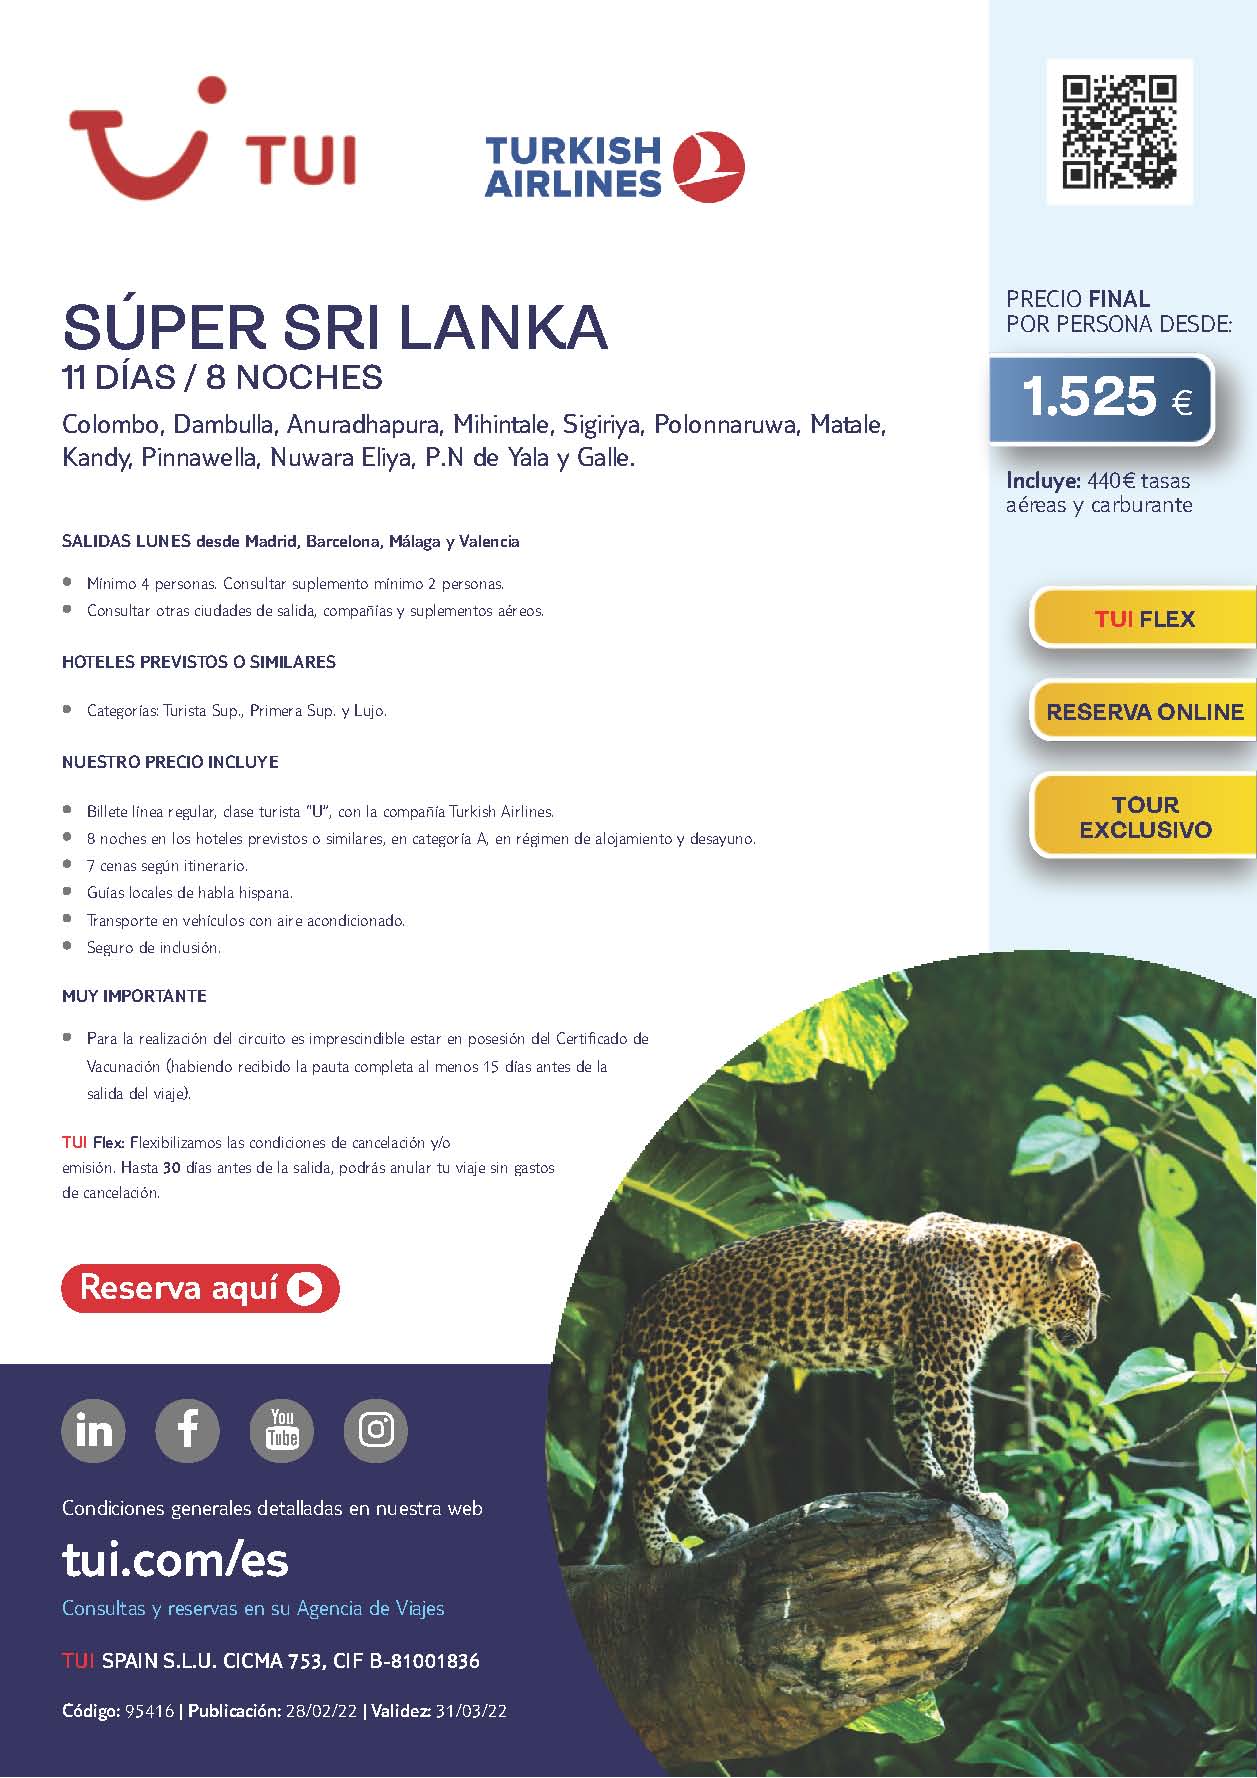 Oferta TUI Sri Lanka 2022 Super Sri Lanka 11 dias salidas desde Madrid Barcelona Malaga Valencia vuelos Turkish Airlines